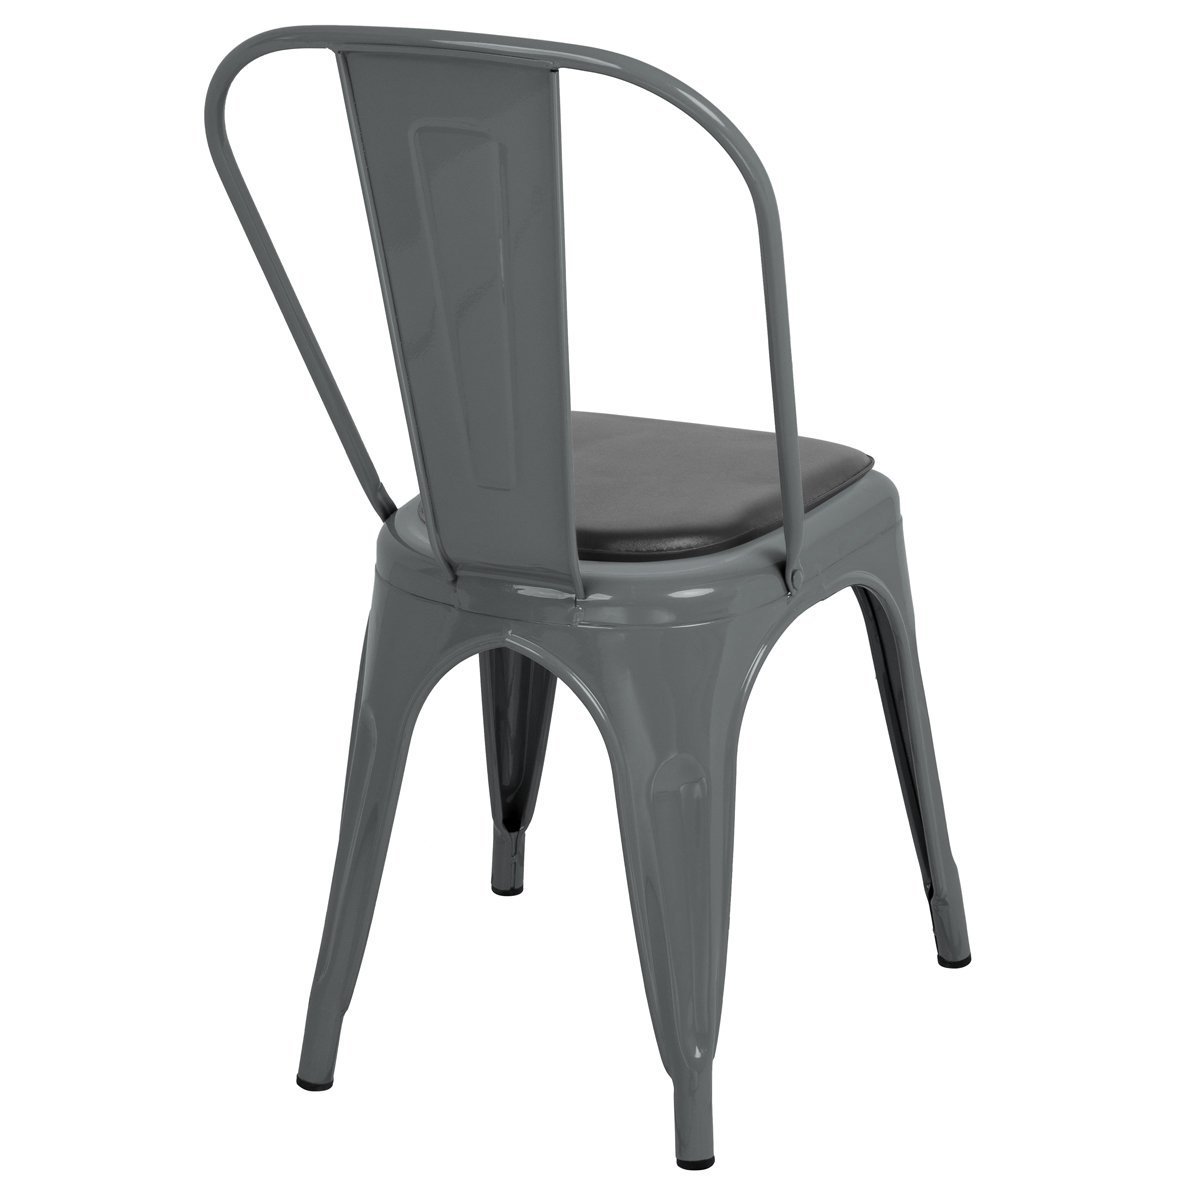 Cadeira Iron Tolix design industrial com almofada - 4